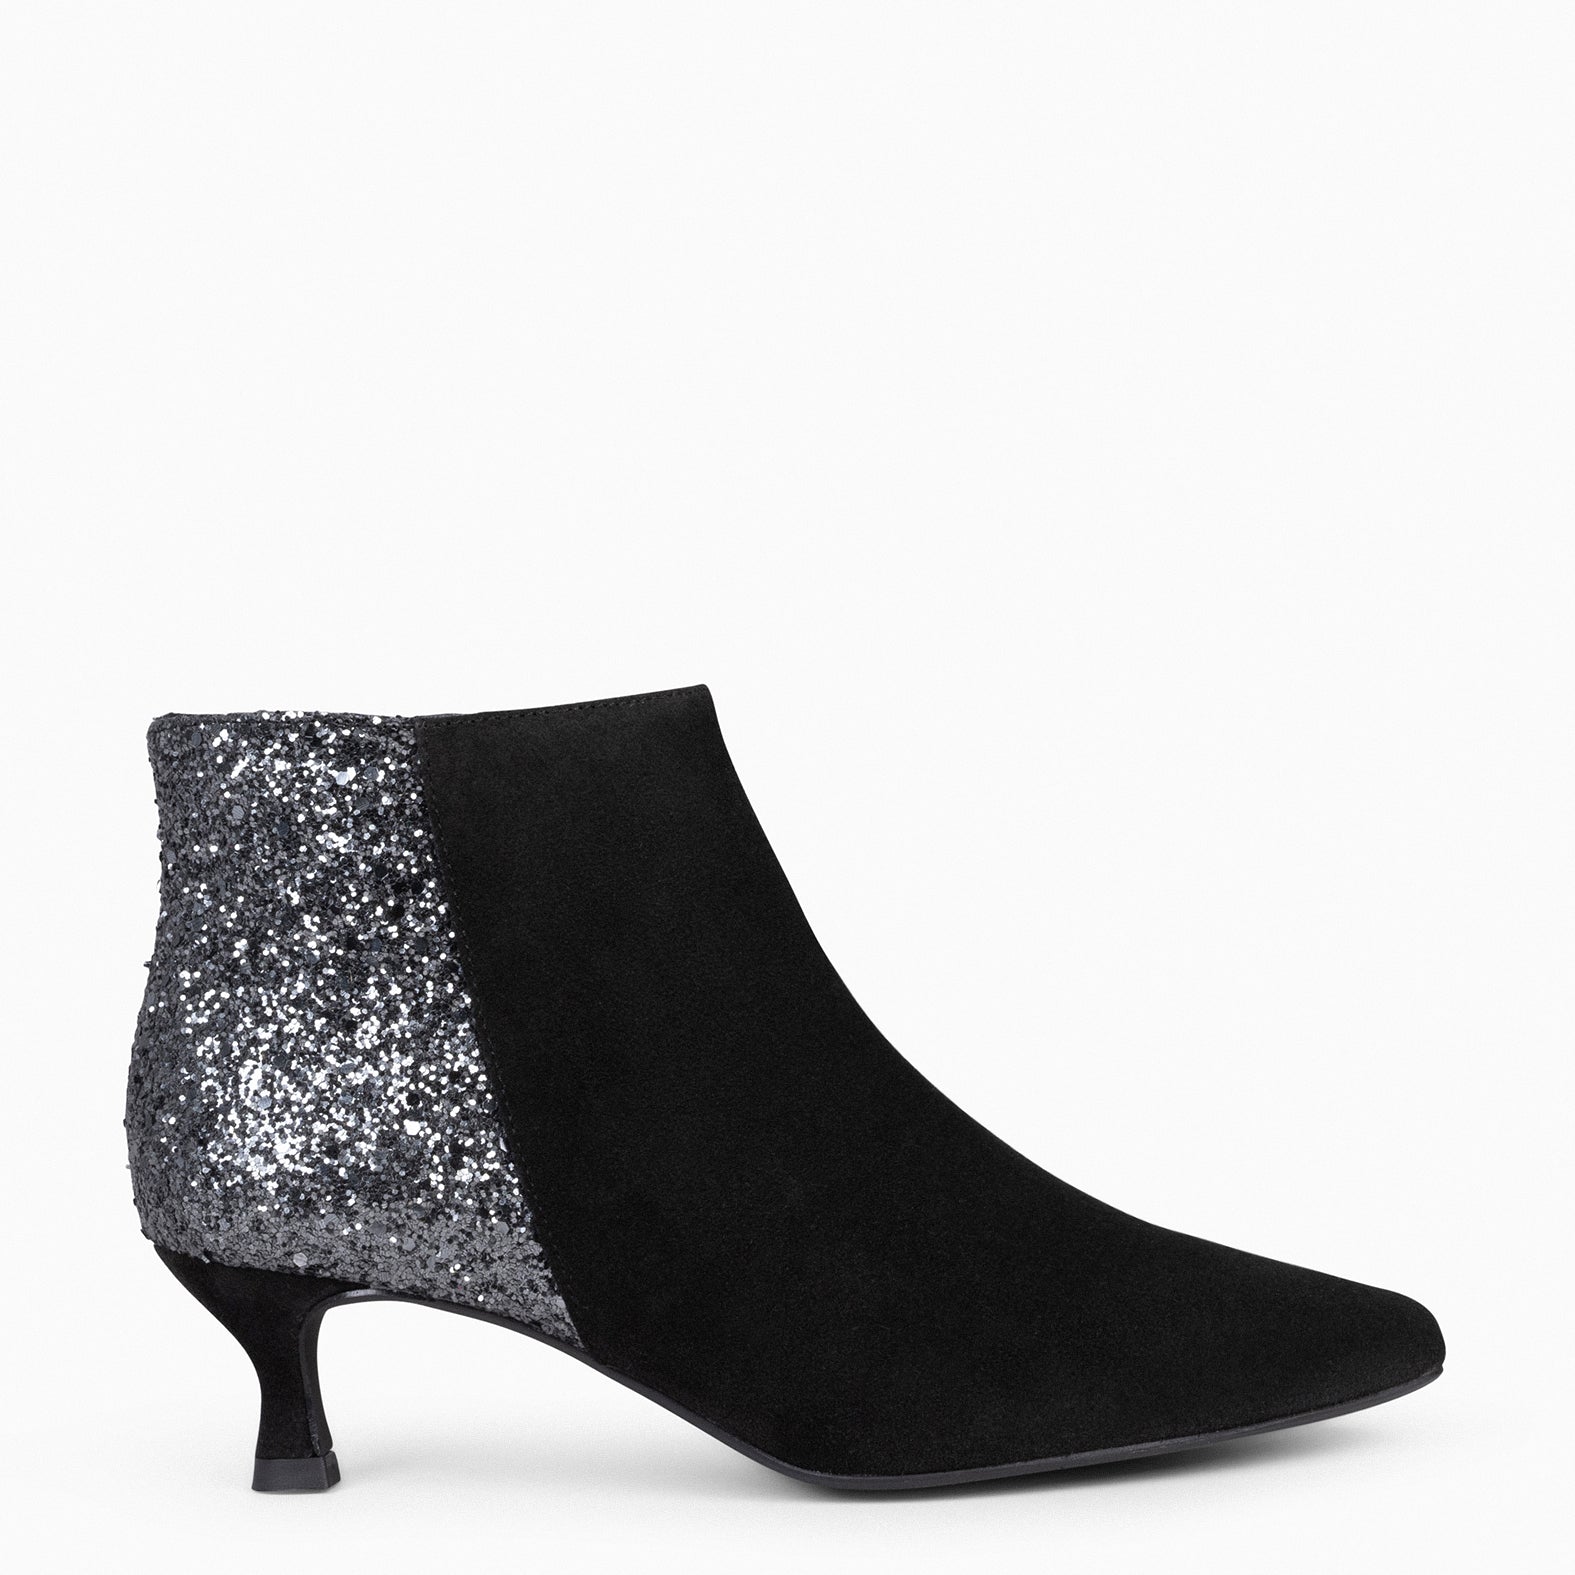 ROYAL SUEDE – BLACK GLITTER Low heel booties